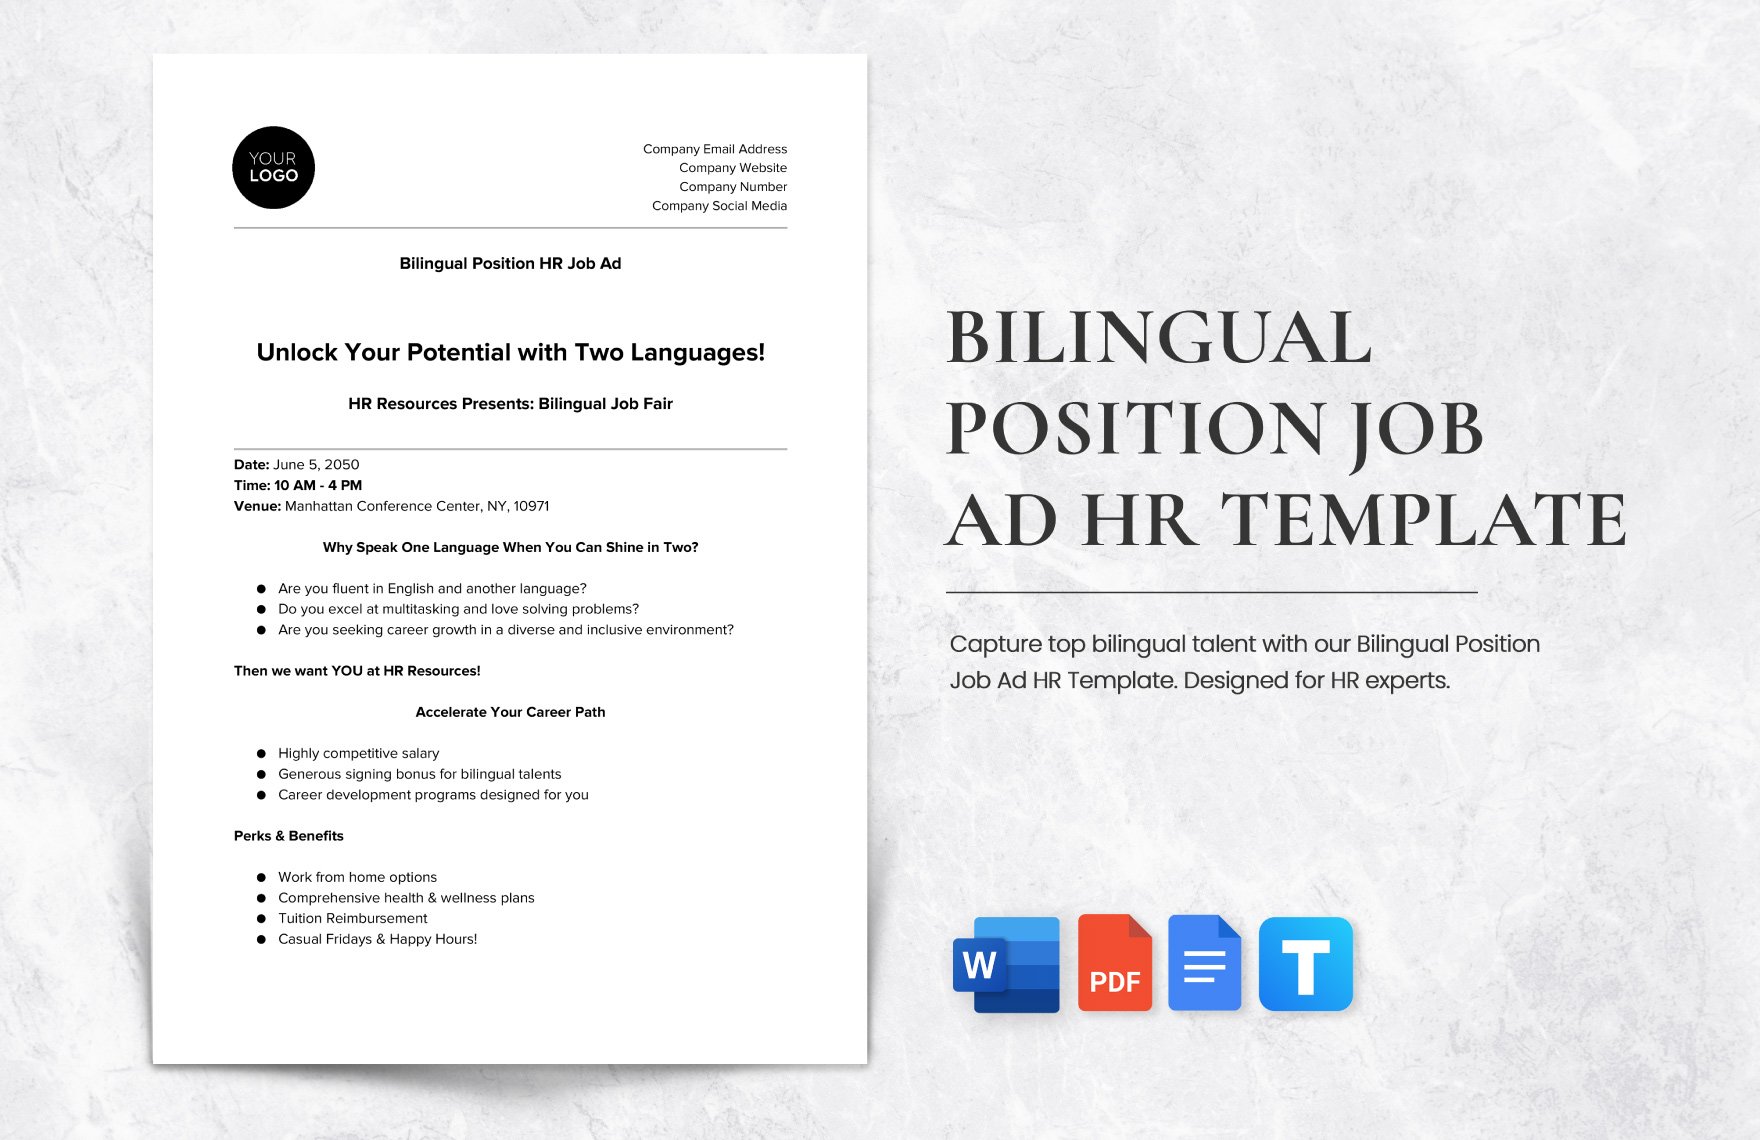 Bilingual Position Job Ad HR Template